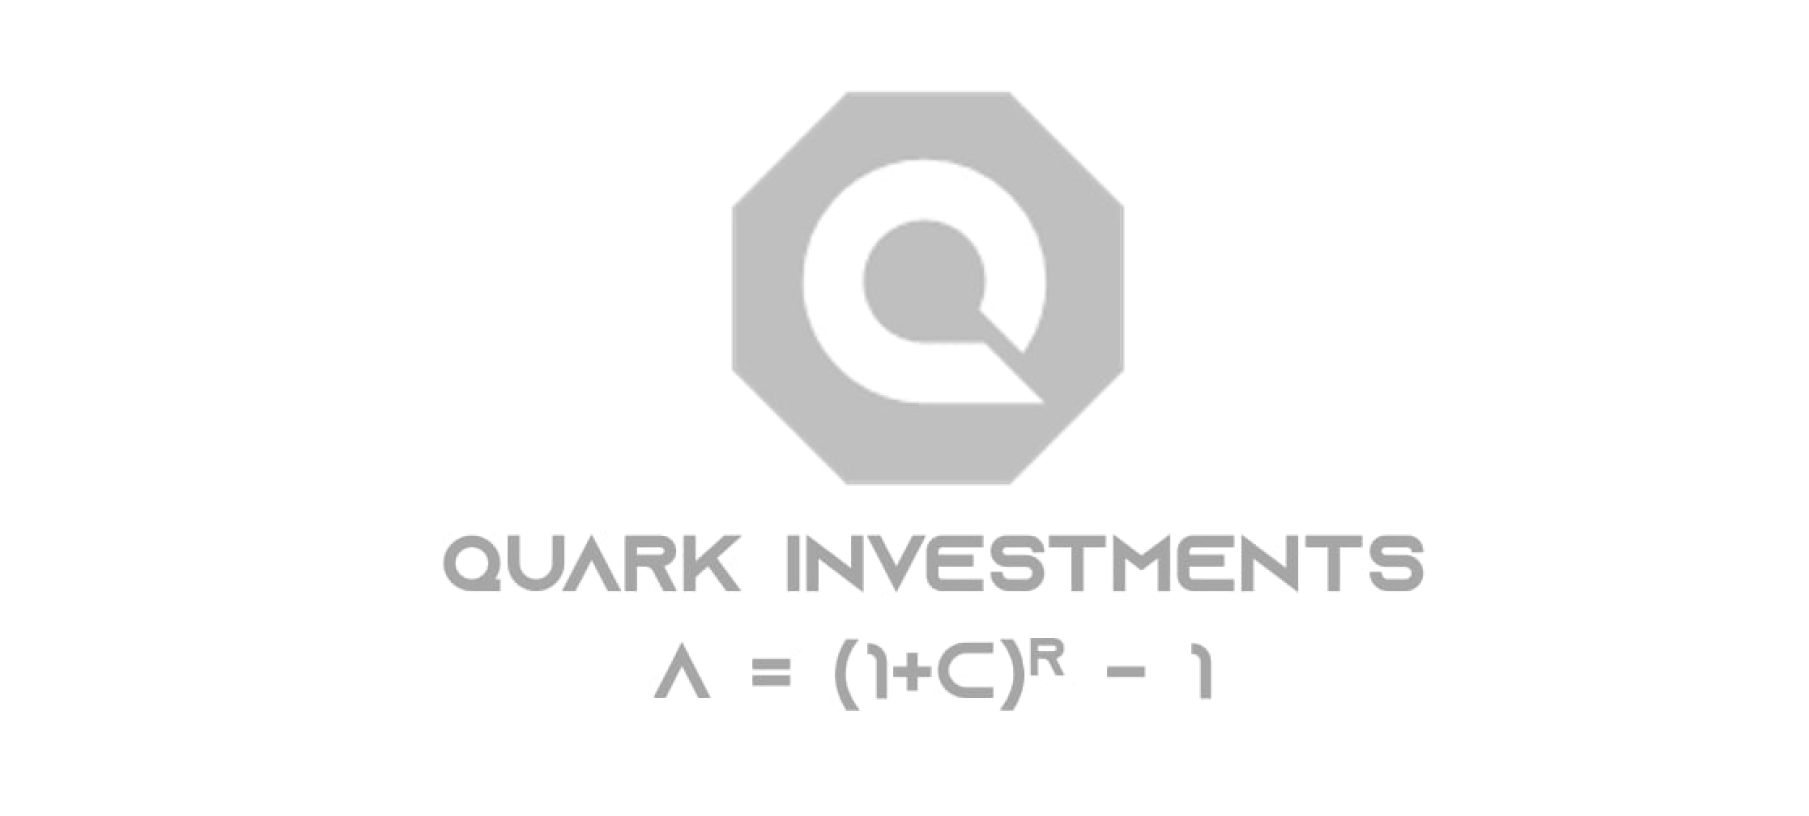 Quark Sets Up an Investment Arm